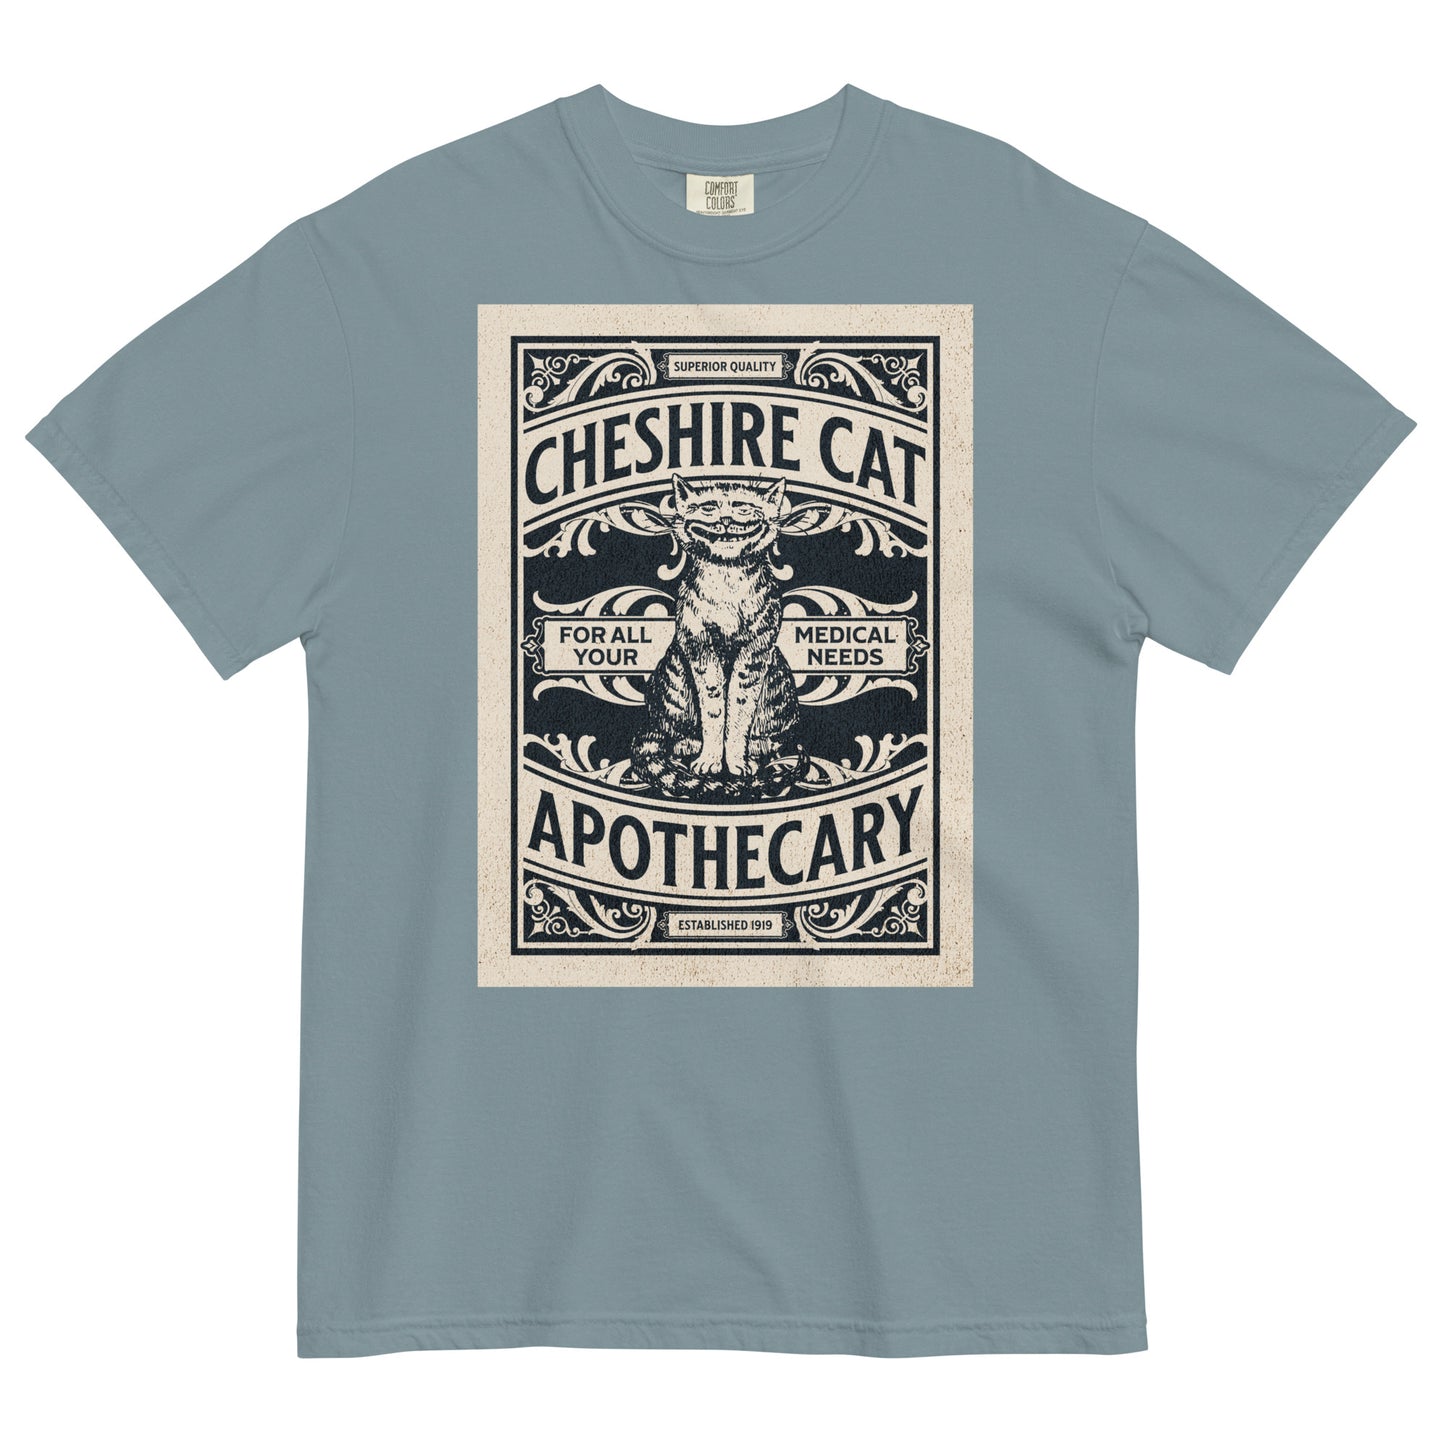 Cheshire Cat Apothecary Tee